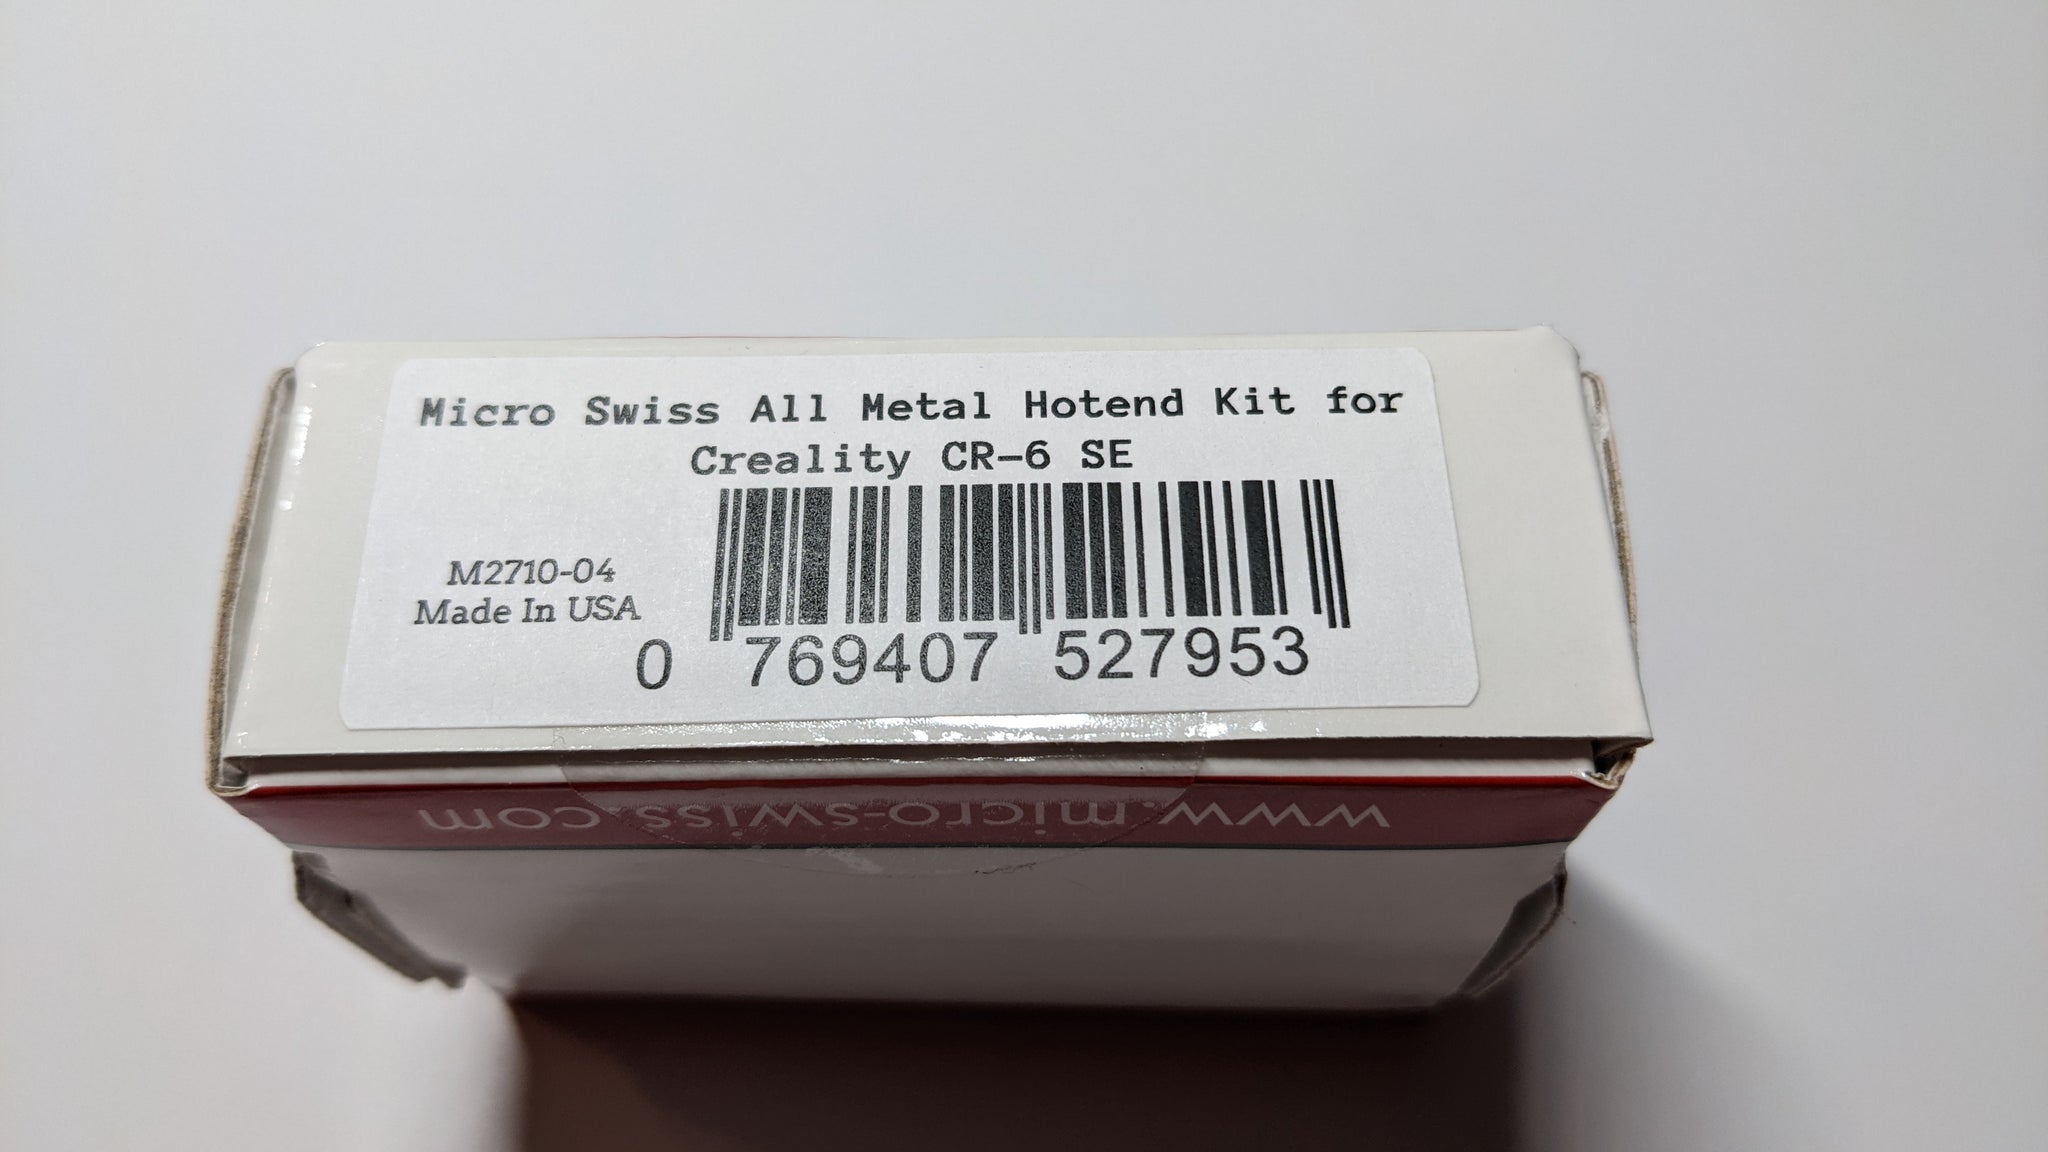 Micro Swiss All Metal Hotend Kit for Creality CR-6 SE